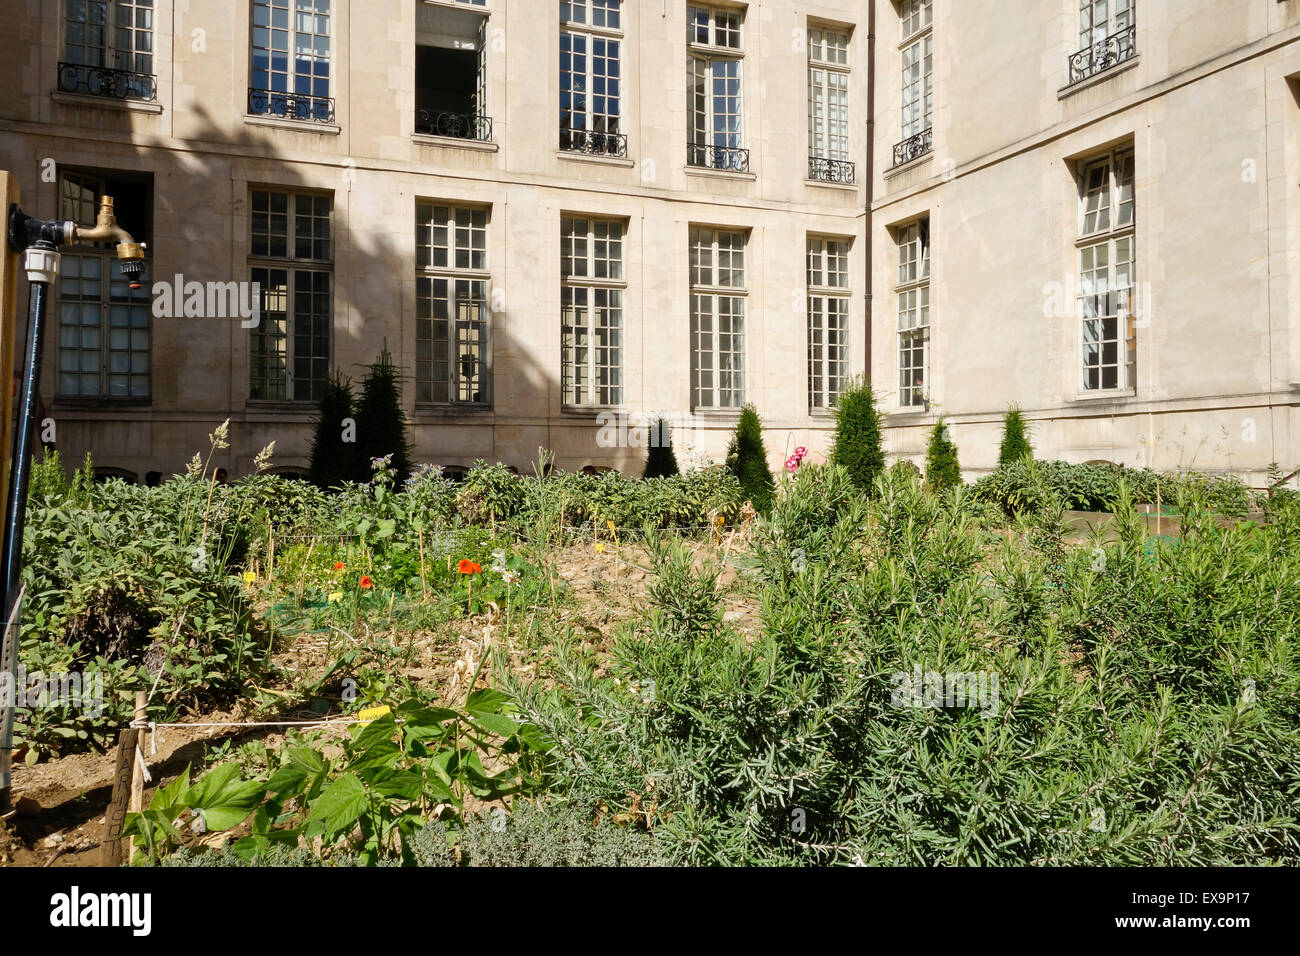 Le jardin des Rosiers, Joseph Migneret garden, hidden gardens, courtyards in the Marais, Paris, France. Stock Photo